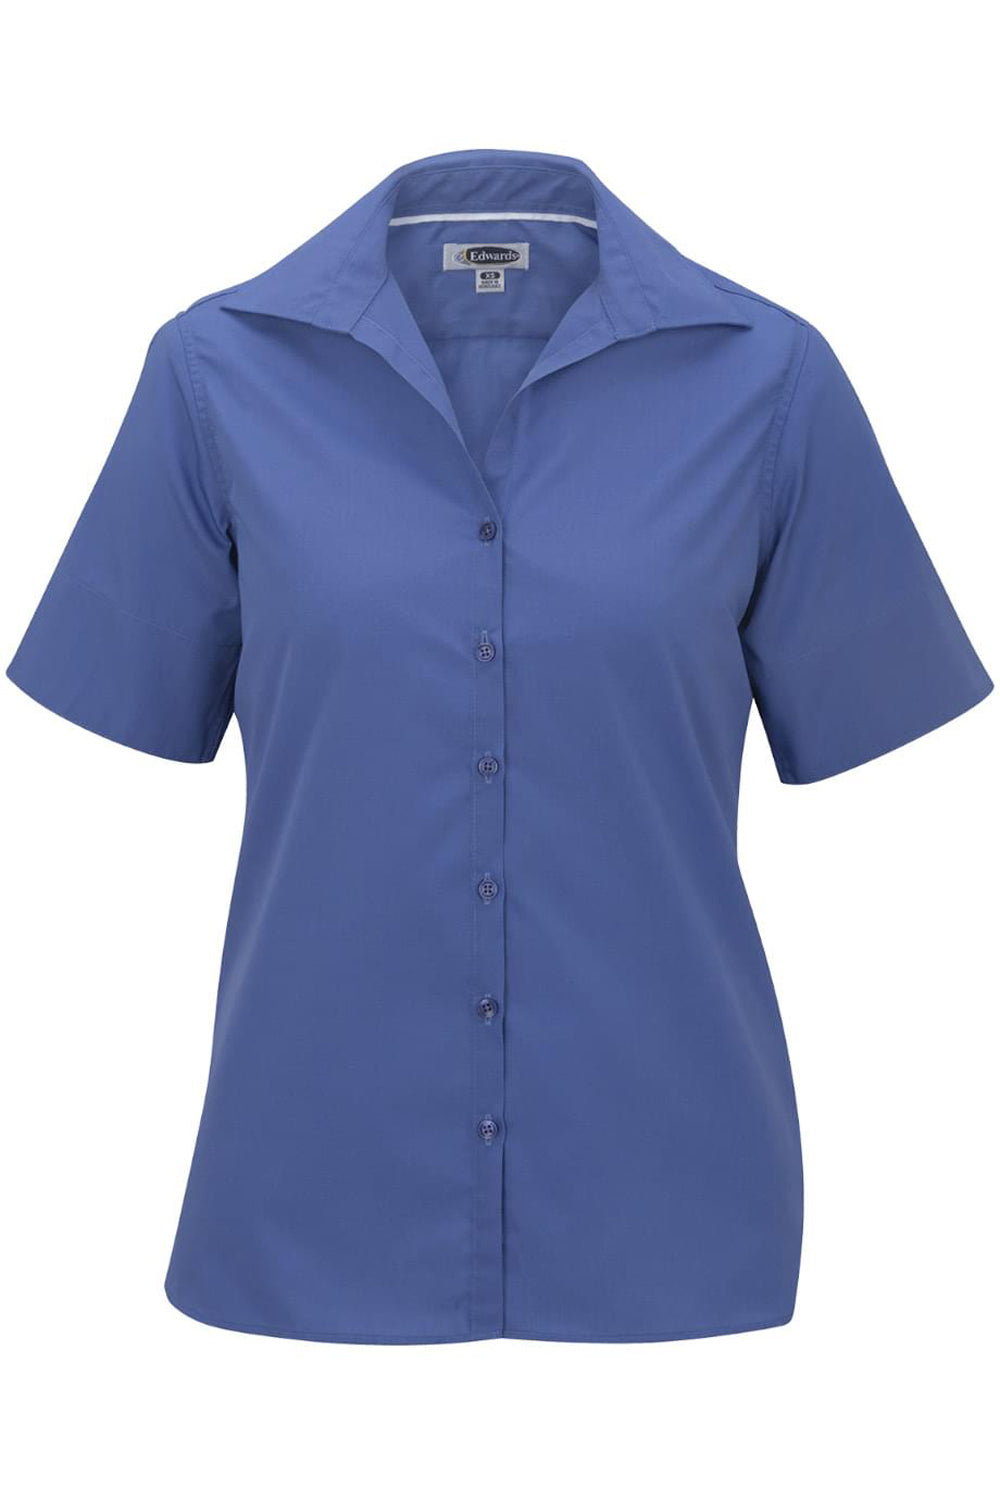 Edwards XXS Ladies' Short Sleeve Poplin - French Blue